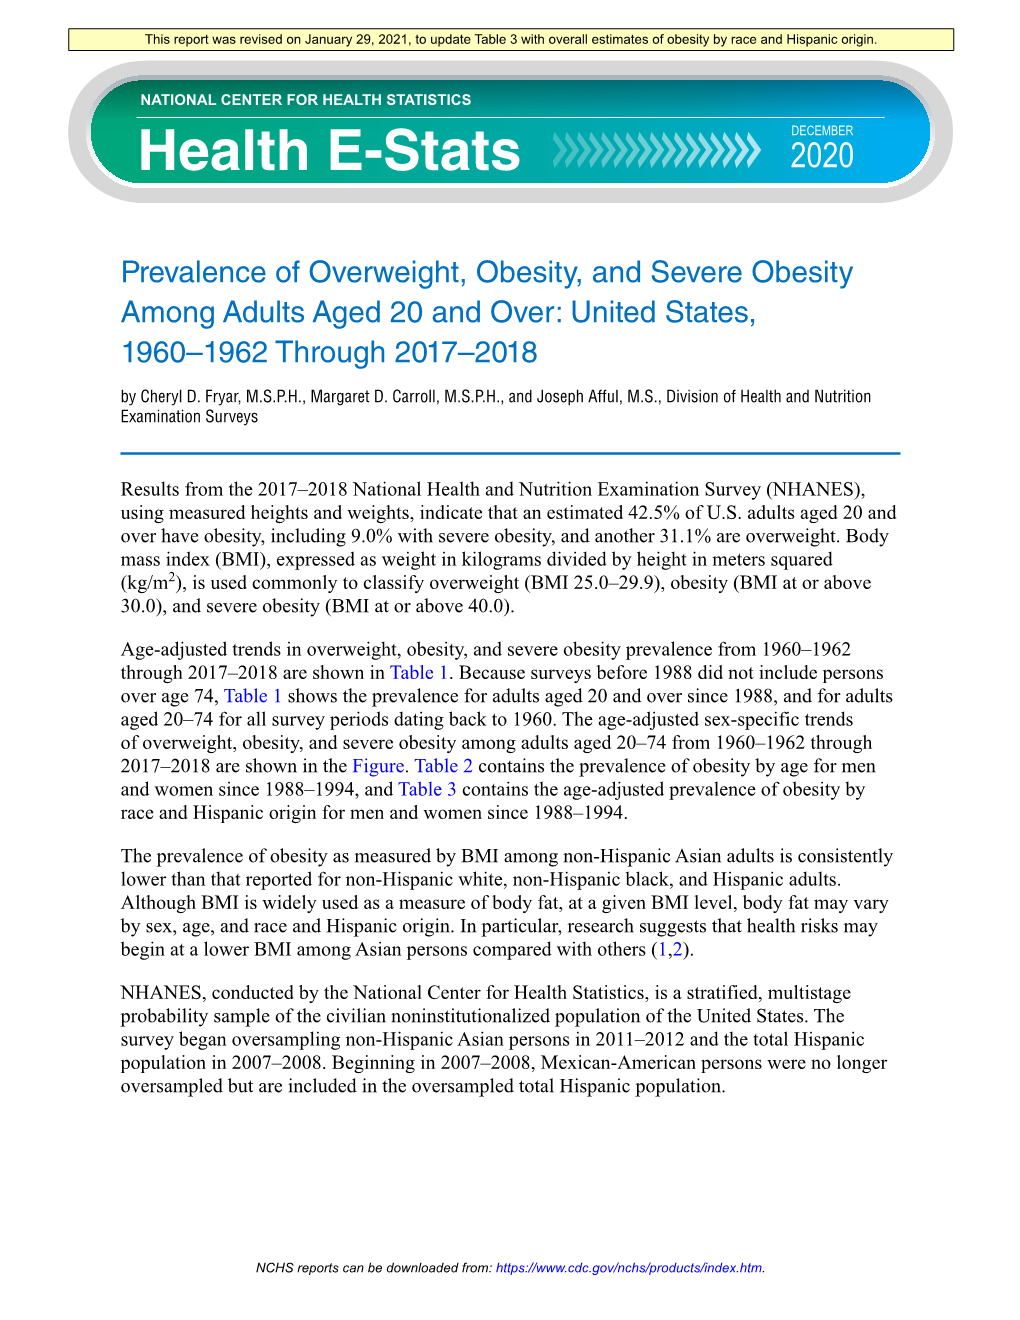 Health E-Stats December 2020